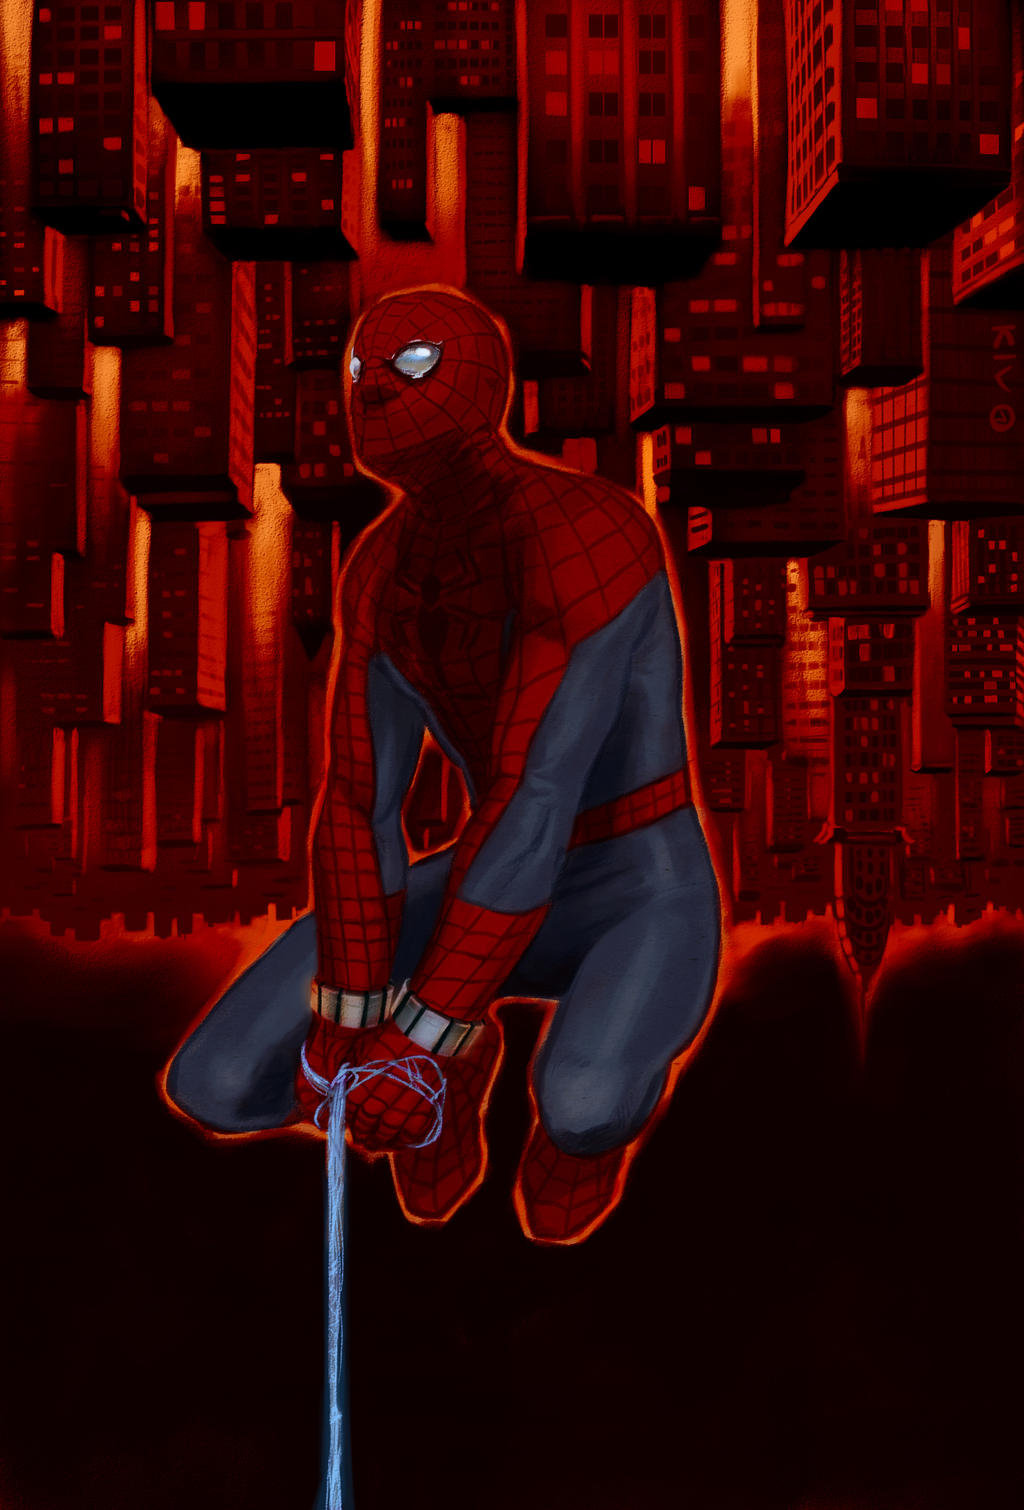 James Cameron's Spiderman by Decepticoin on DeviantArt